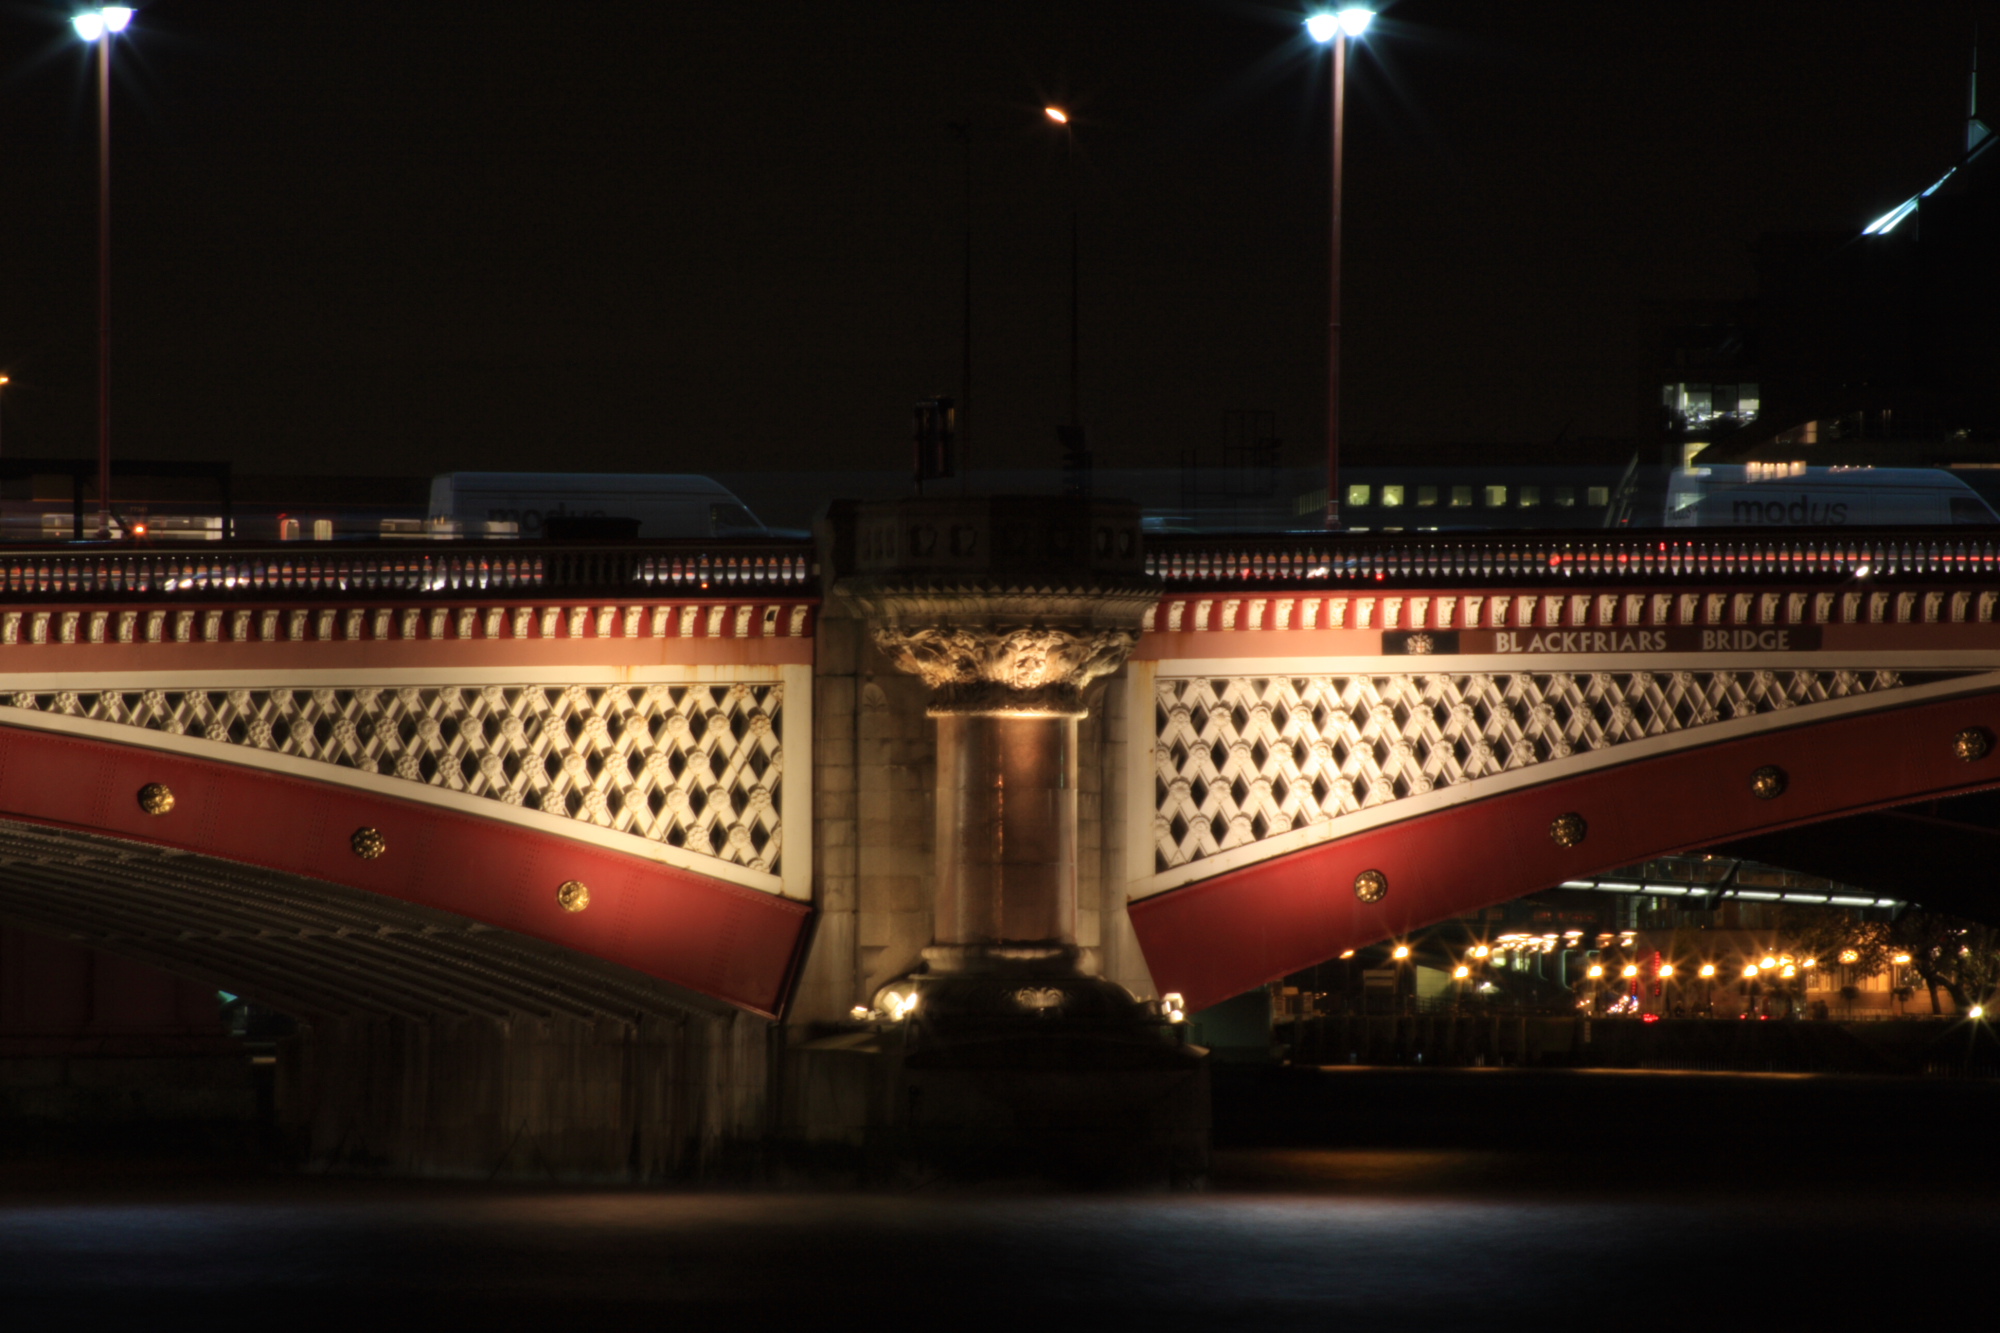 Illuminated bridge at night over the Thames